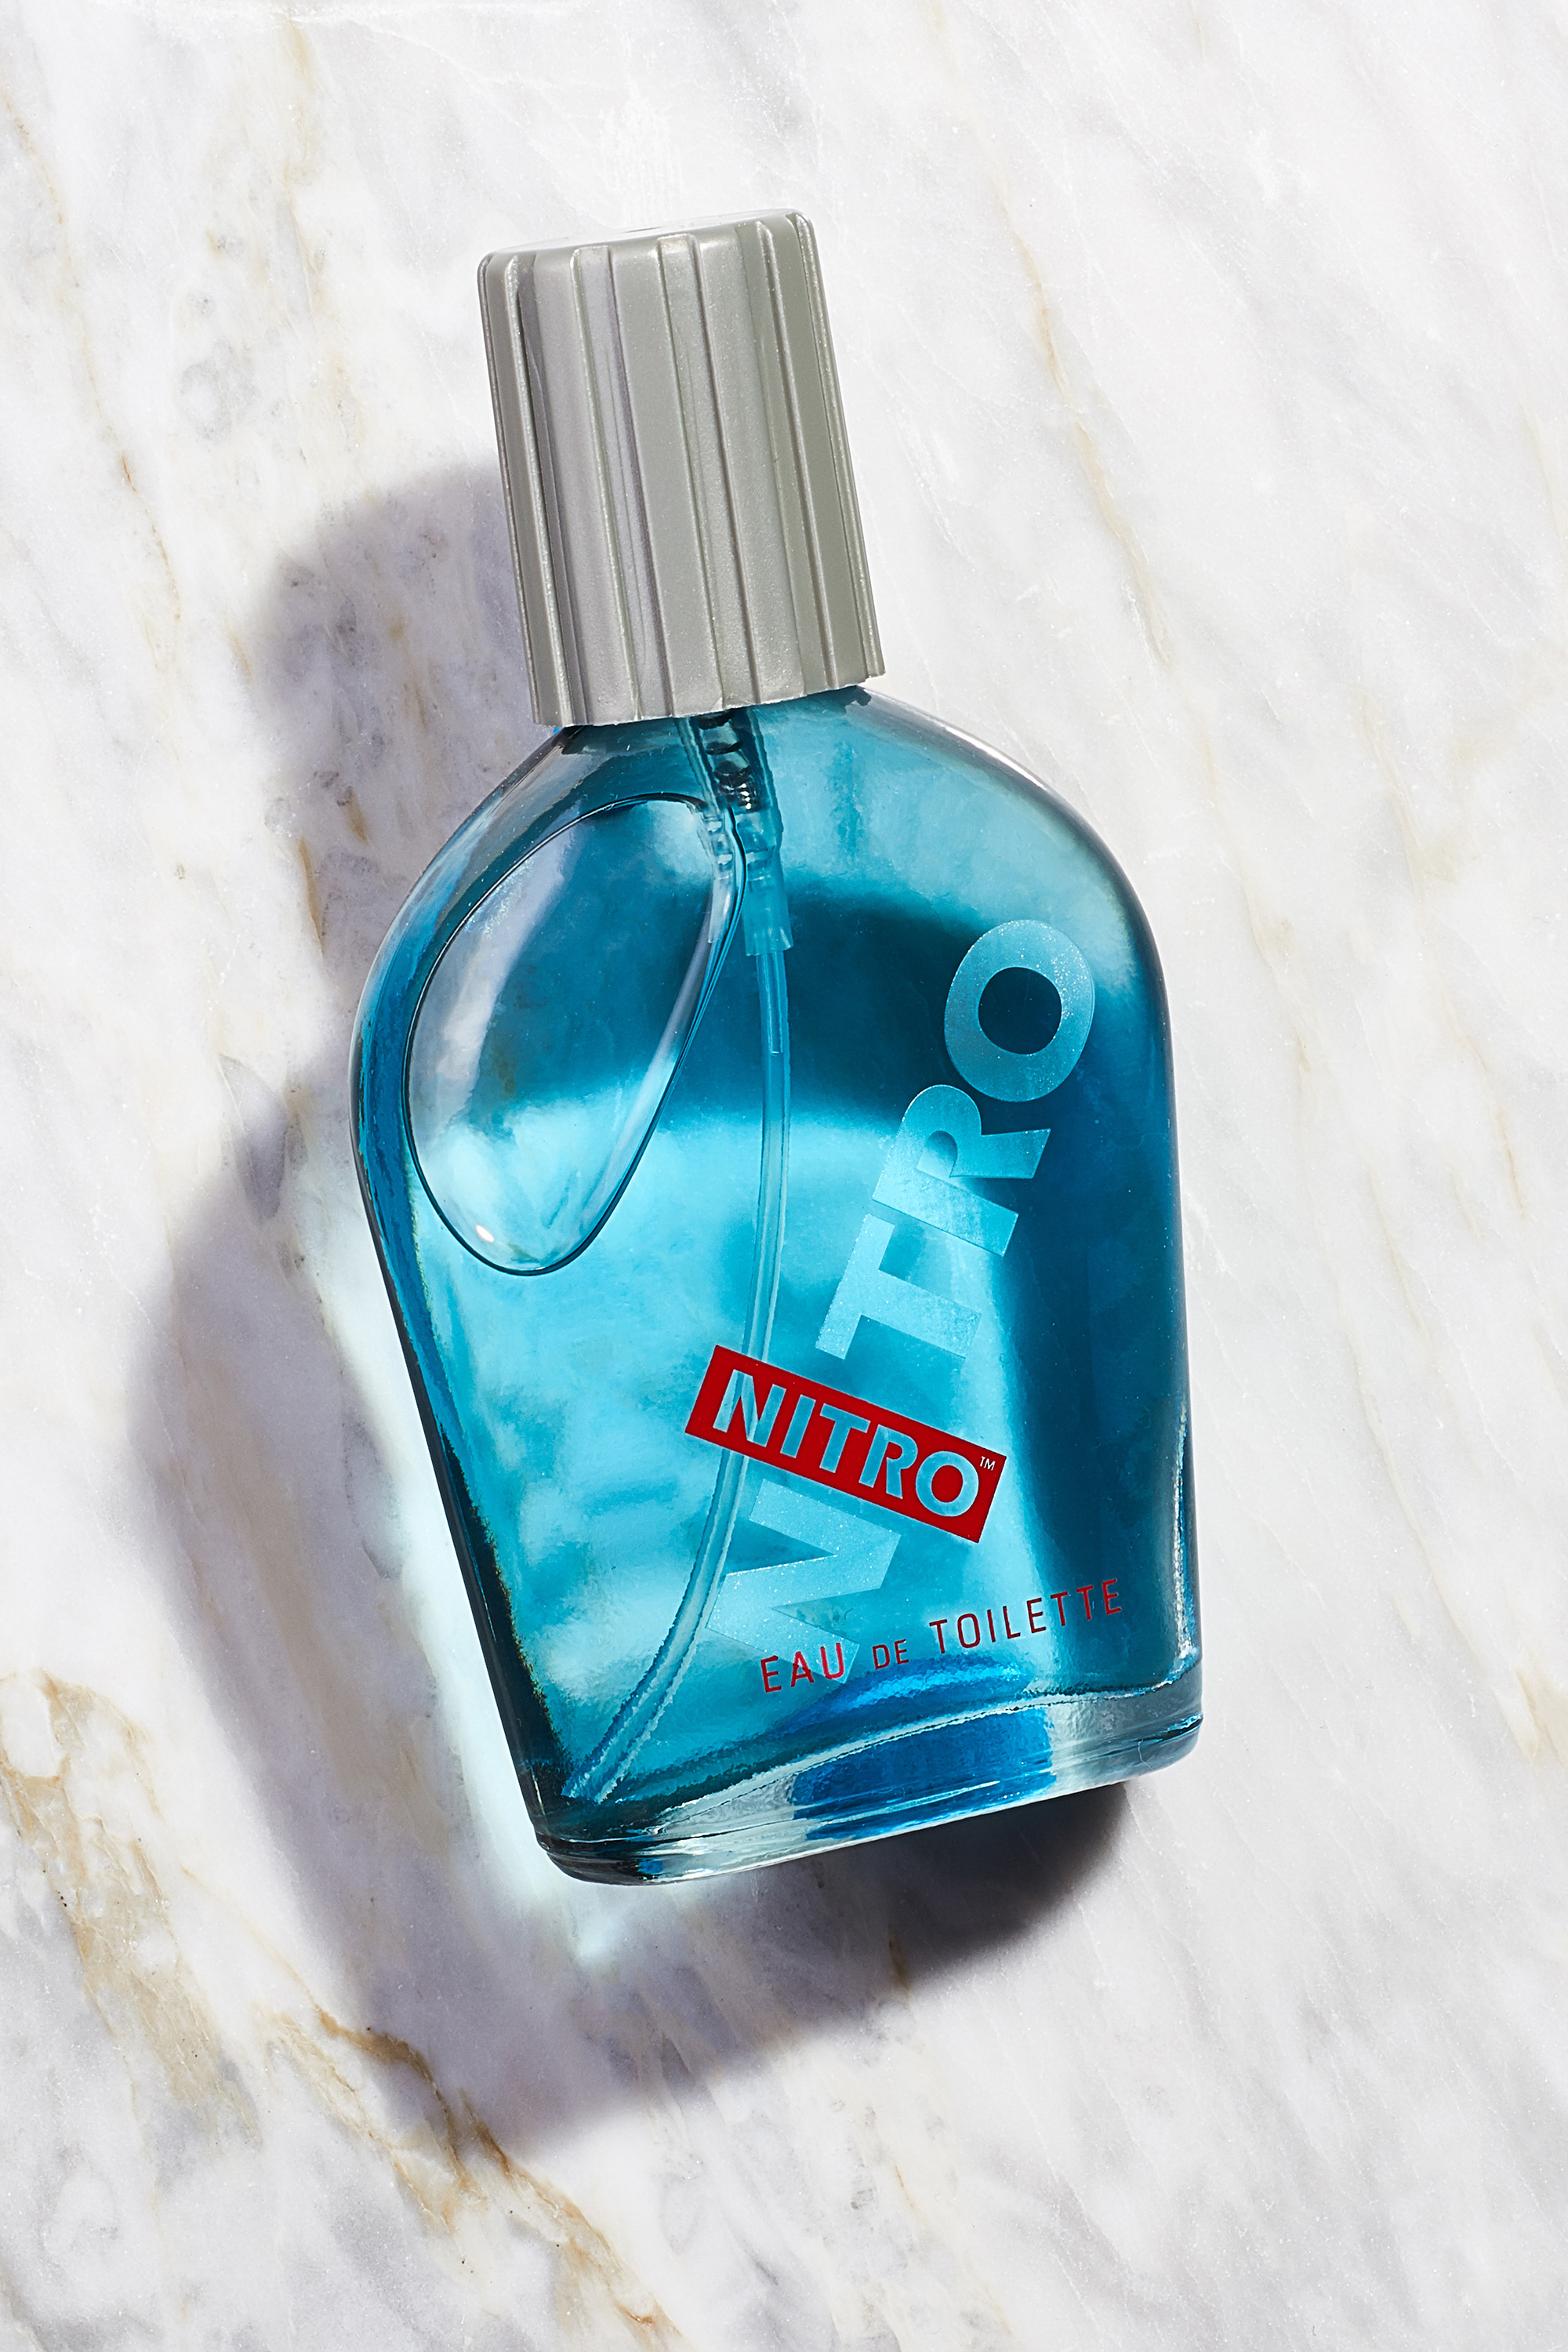 PB ParfumsBelcam Nitro version of Hugo, Eau De Toilette, Cologne for Men, 3.4 Fl oz - image 5 of 7